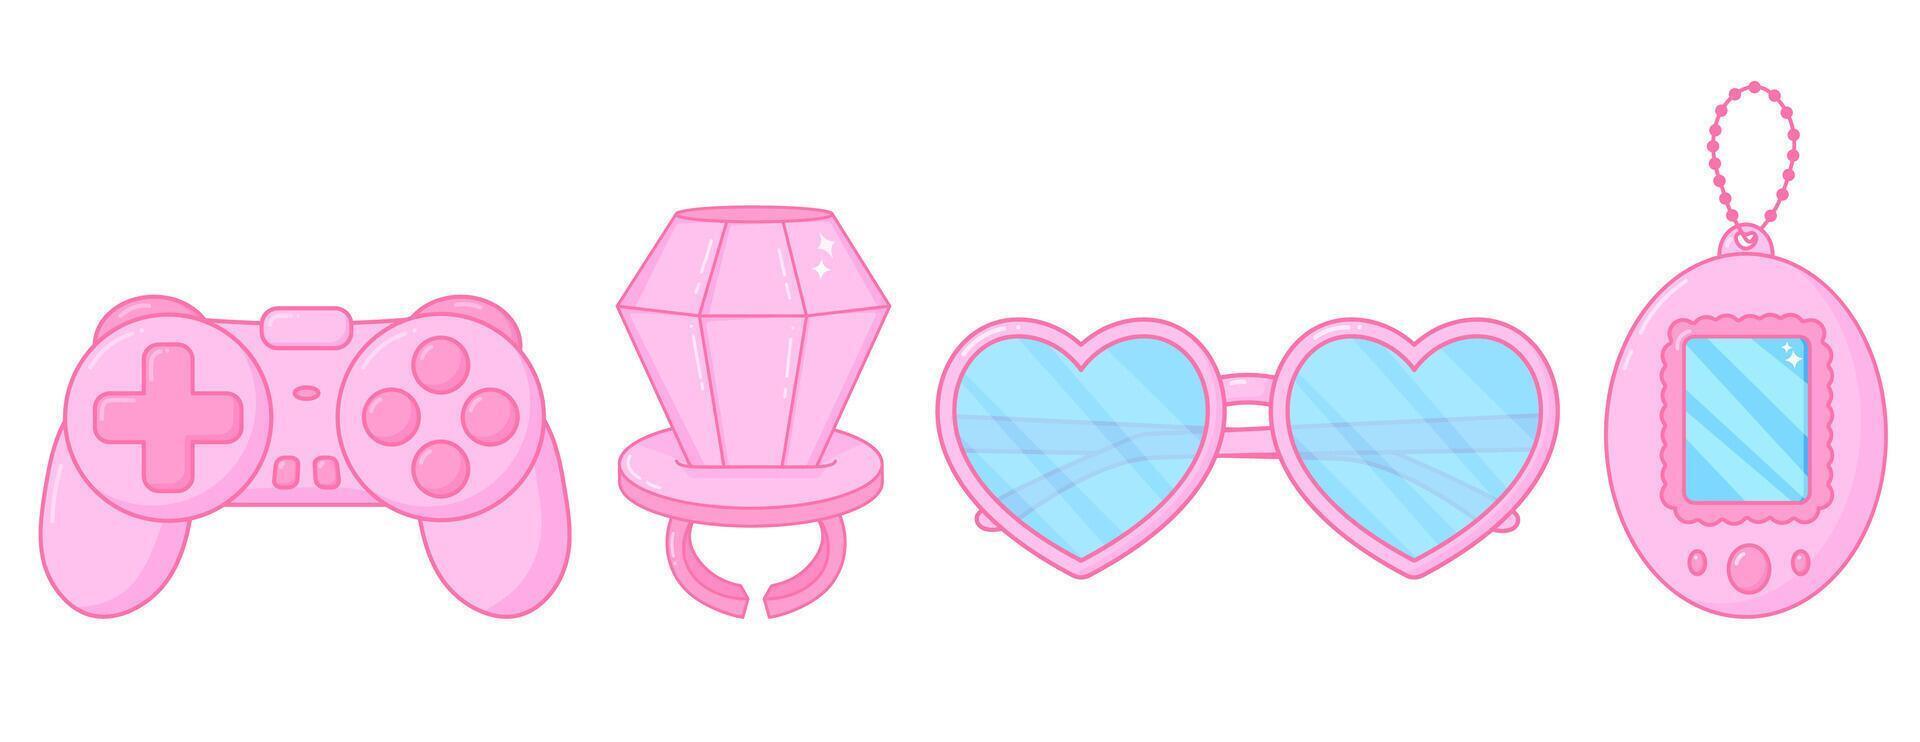 schattig meisjesachtig set. roze tiener- stijl. kawaii glamour. nostalgie stijlvol. hartvormig bril, plastic lolly ring, tamagotchi, gamepad. vector